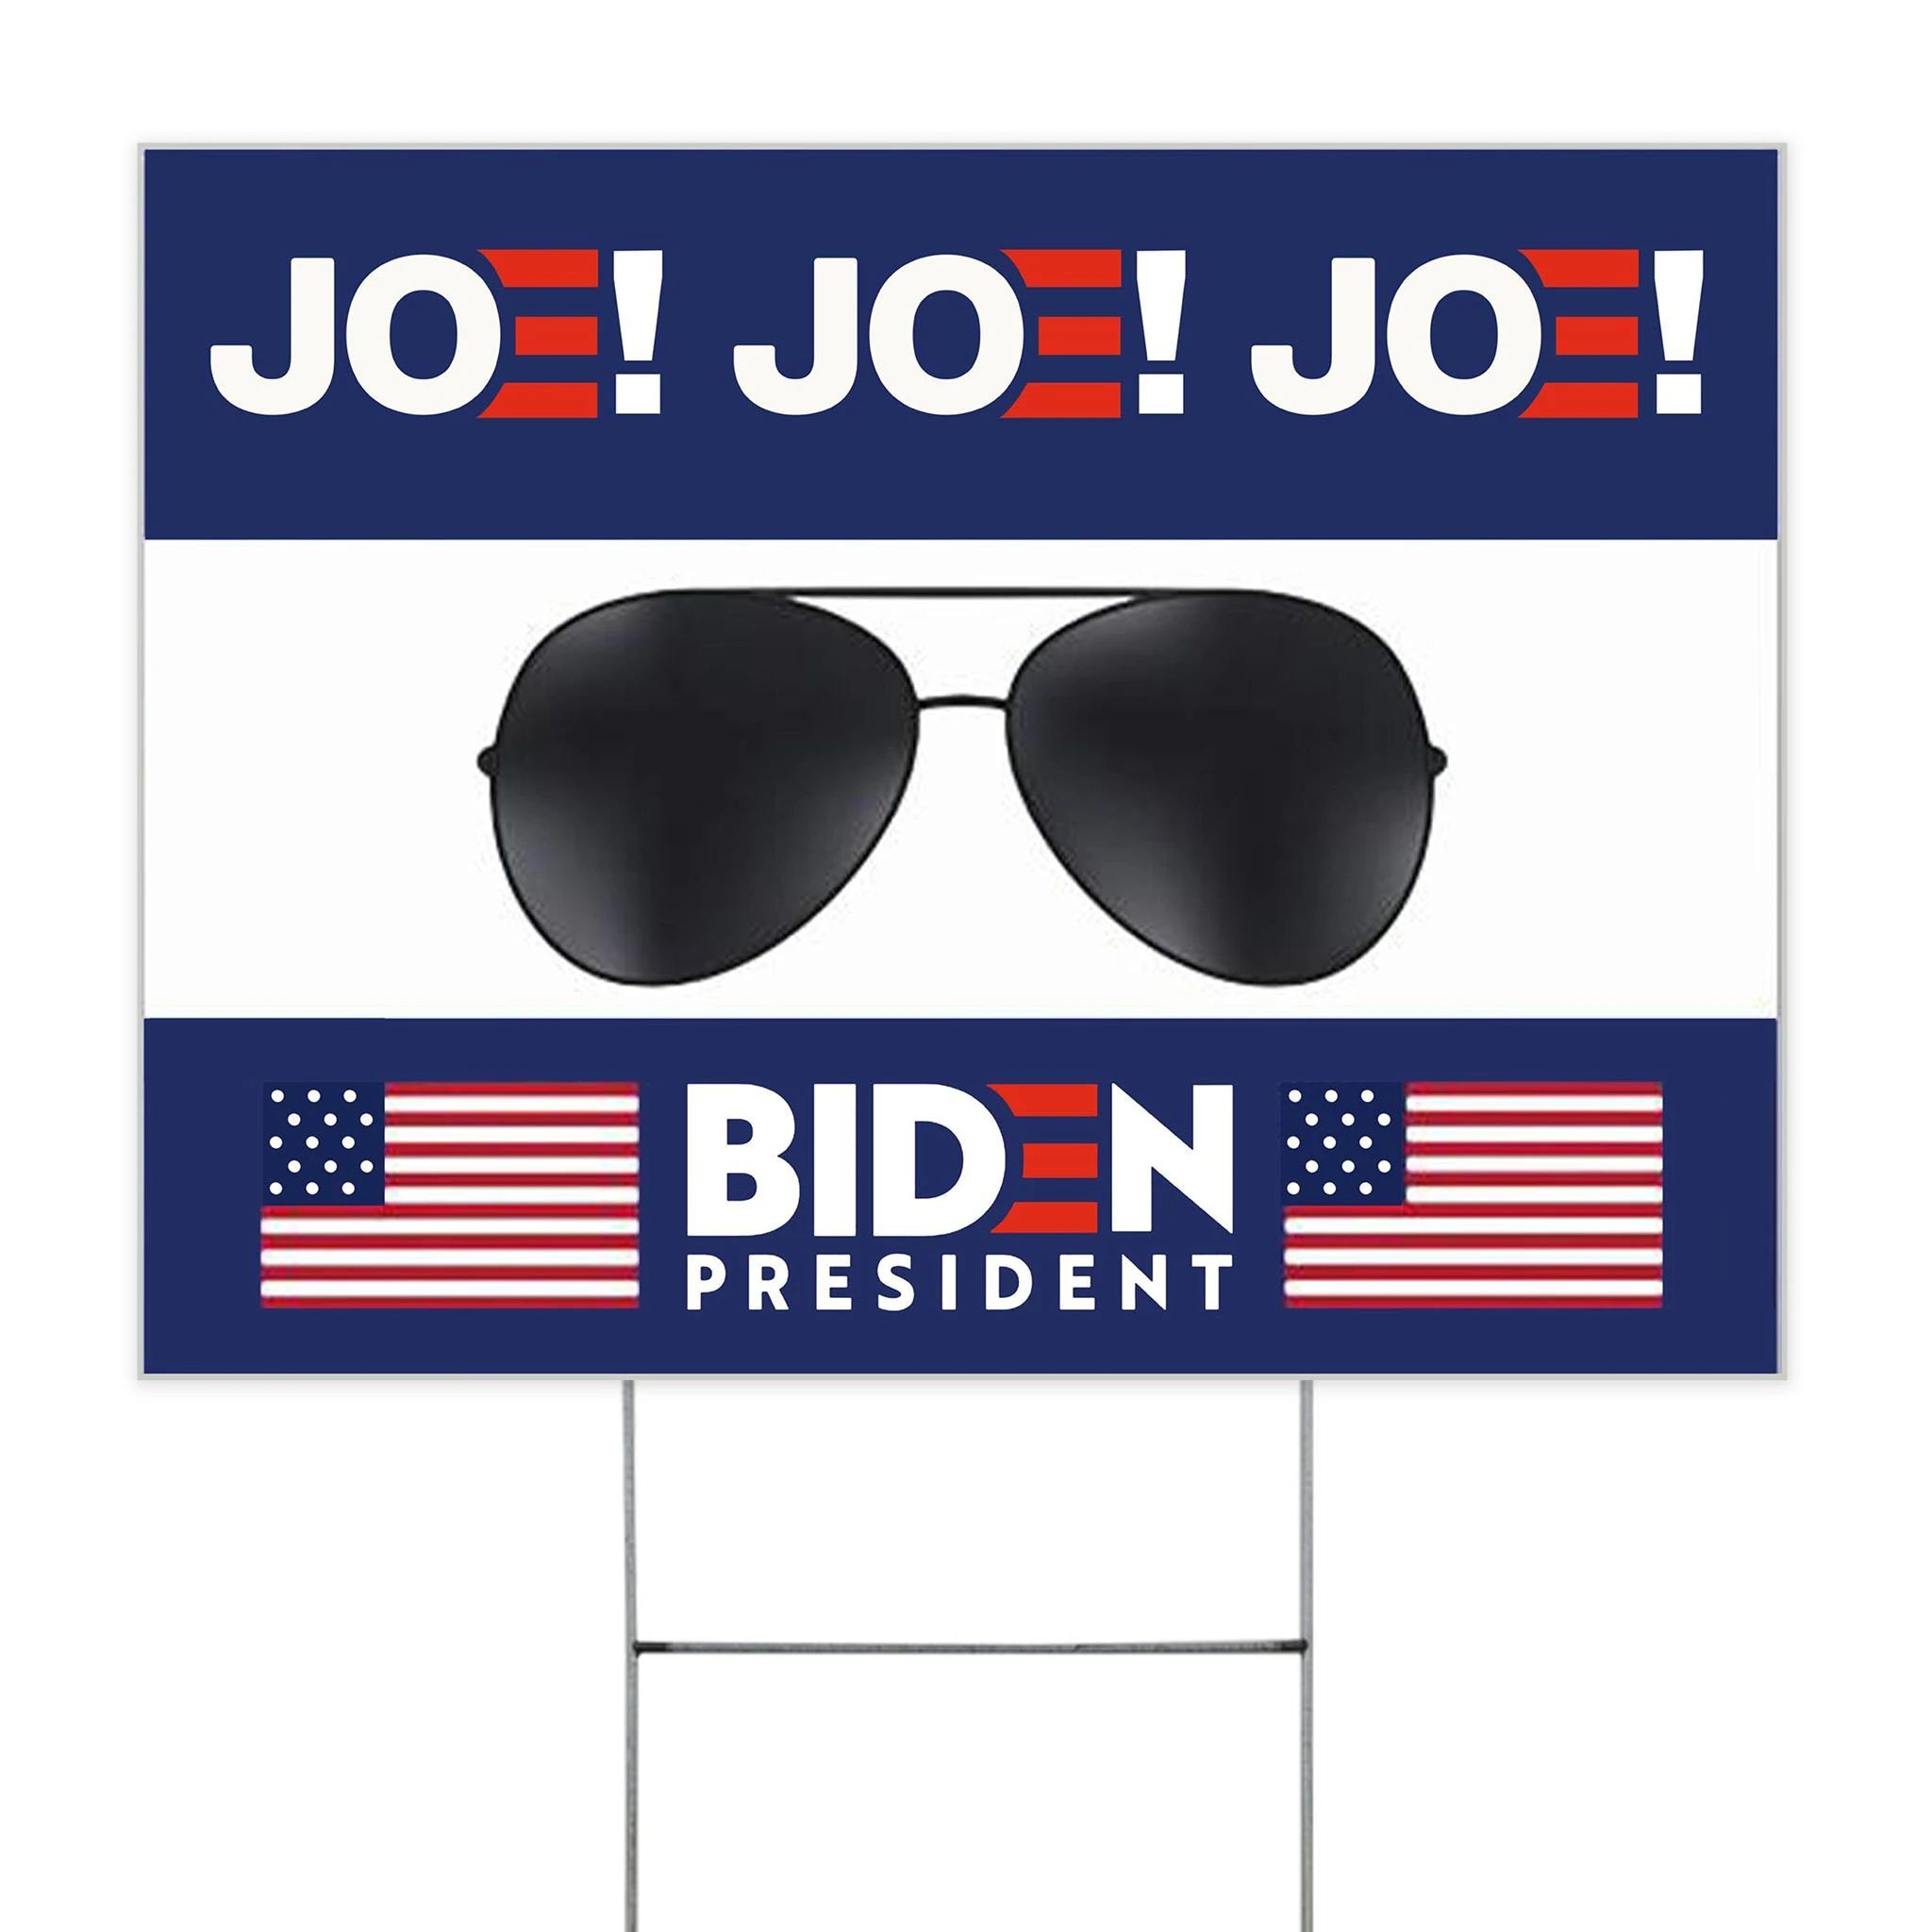 Joe Joe Joe Biden President Sunglasses American Flag Yard Sign Biden Supporter Political Elect